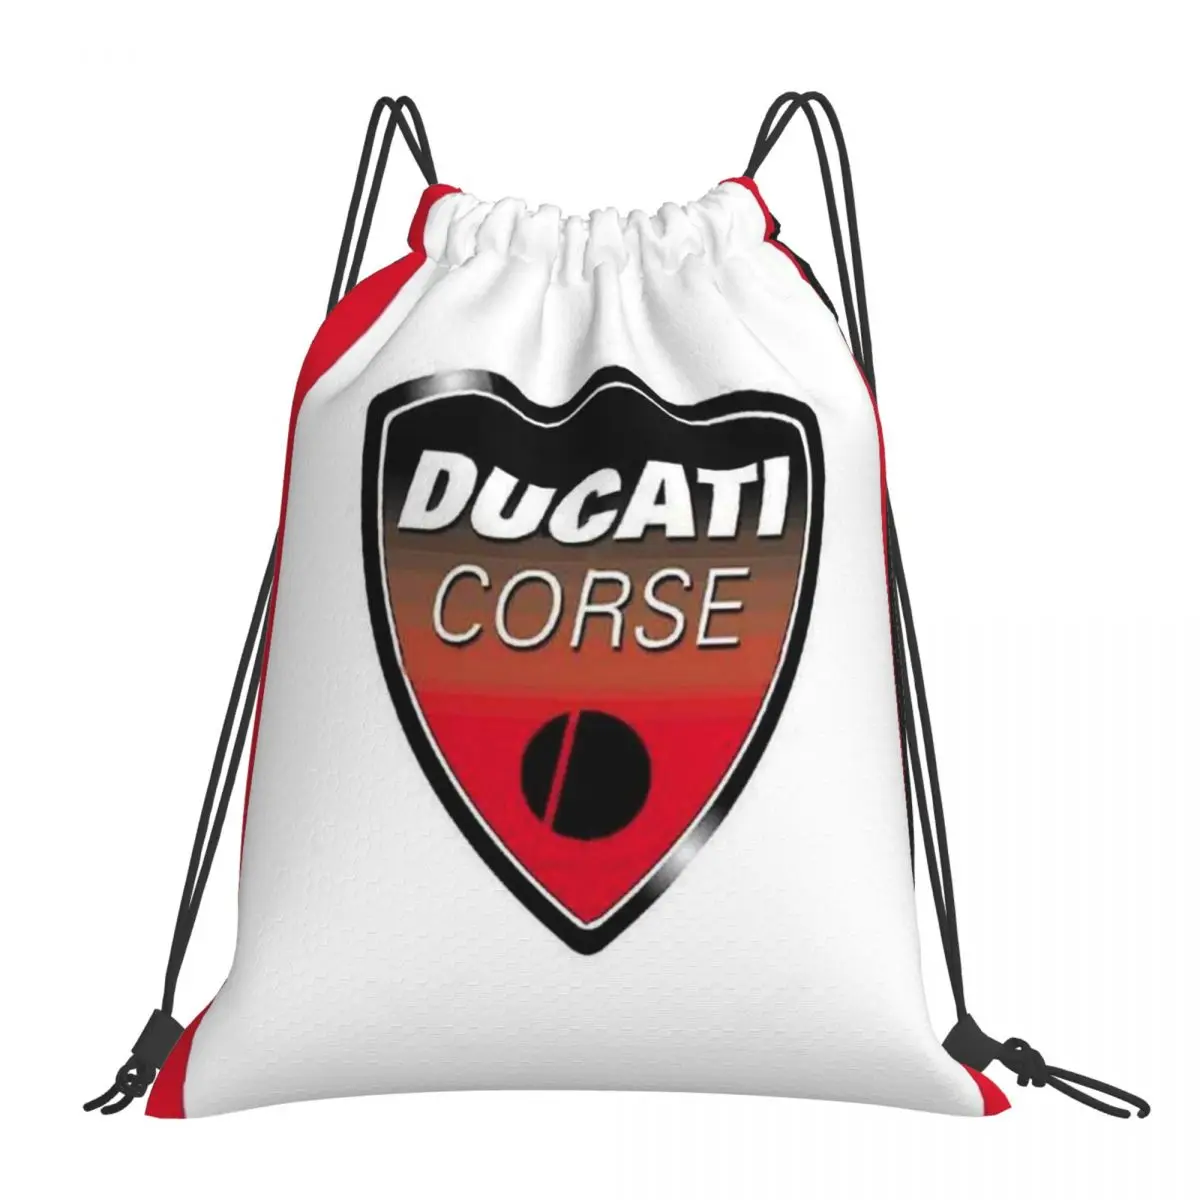 

Super Bike Ducati Corse Backpack Fashion Portable Drawstring Bags Drawstring Bundle Pocket Sports Bag BookBags For Travel School